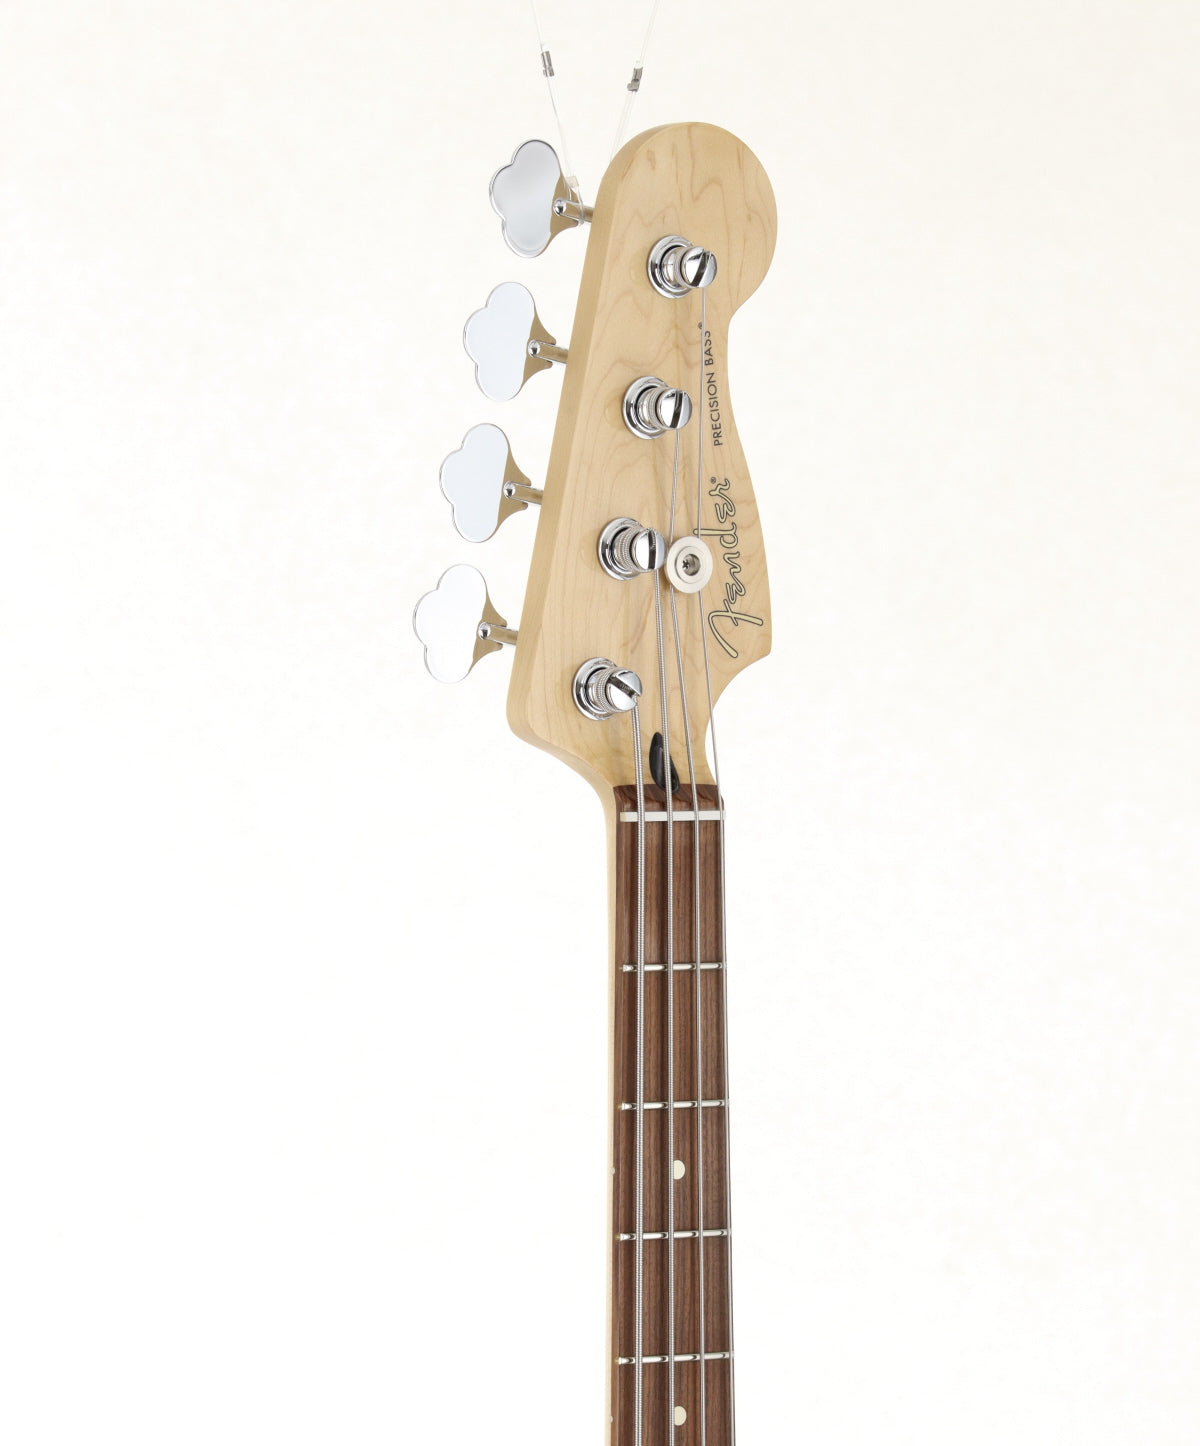 [SN MX22021249] USED Fender Mexico / Player Precision Bass 3Tone Sunburst [03]